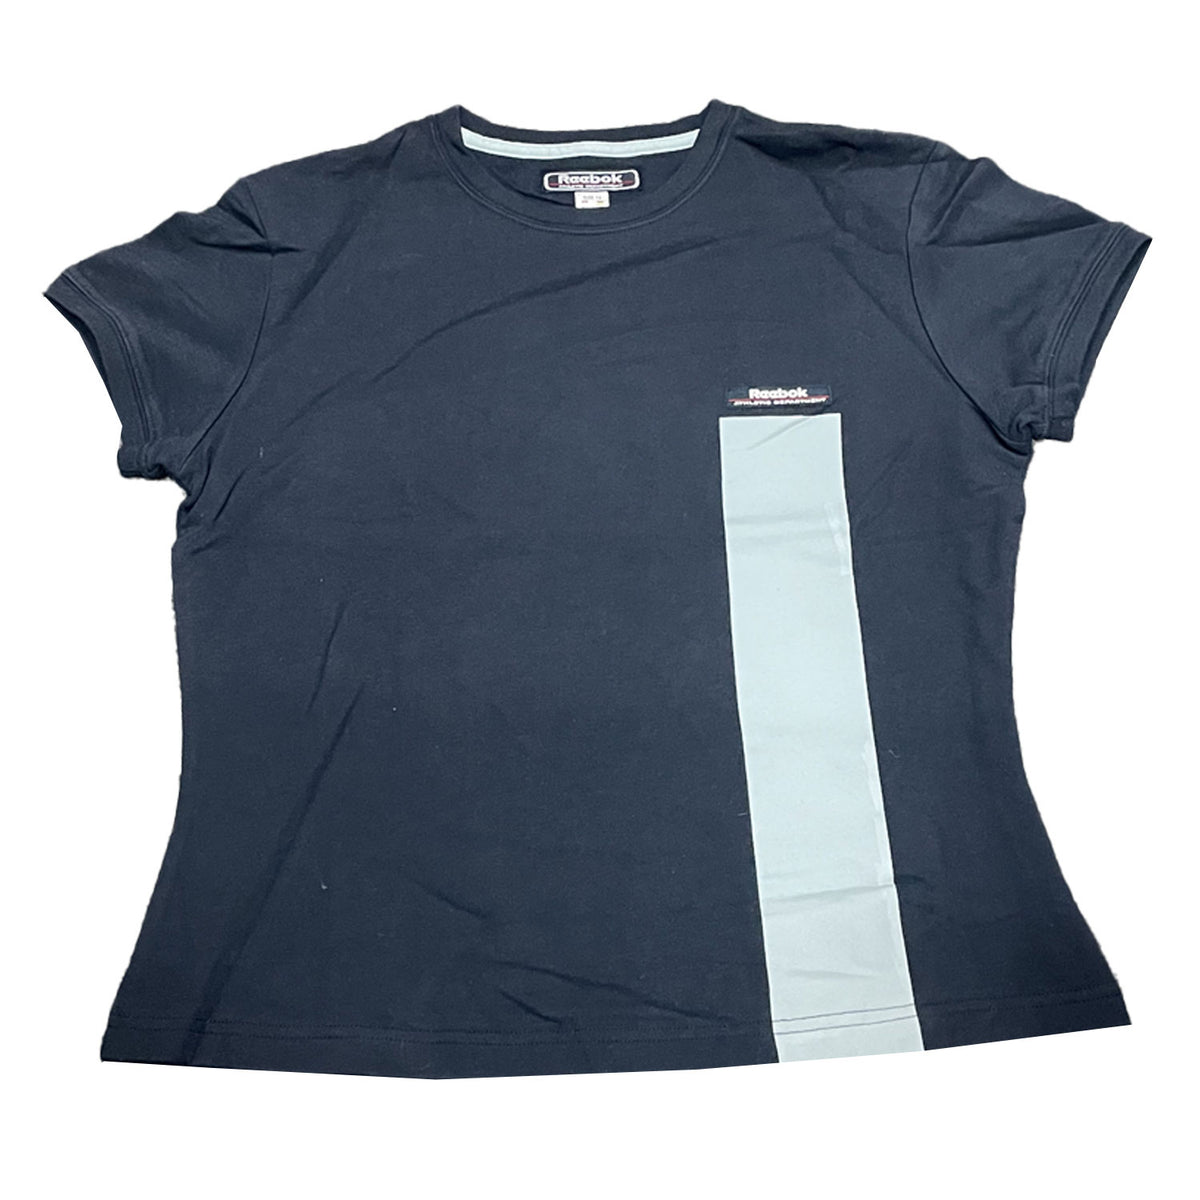 Reebok Womens Contrast T-Shirt - Navy - UK Size 12